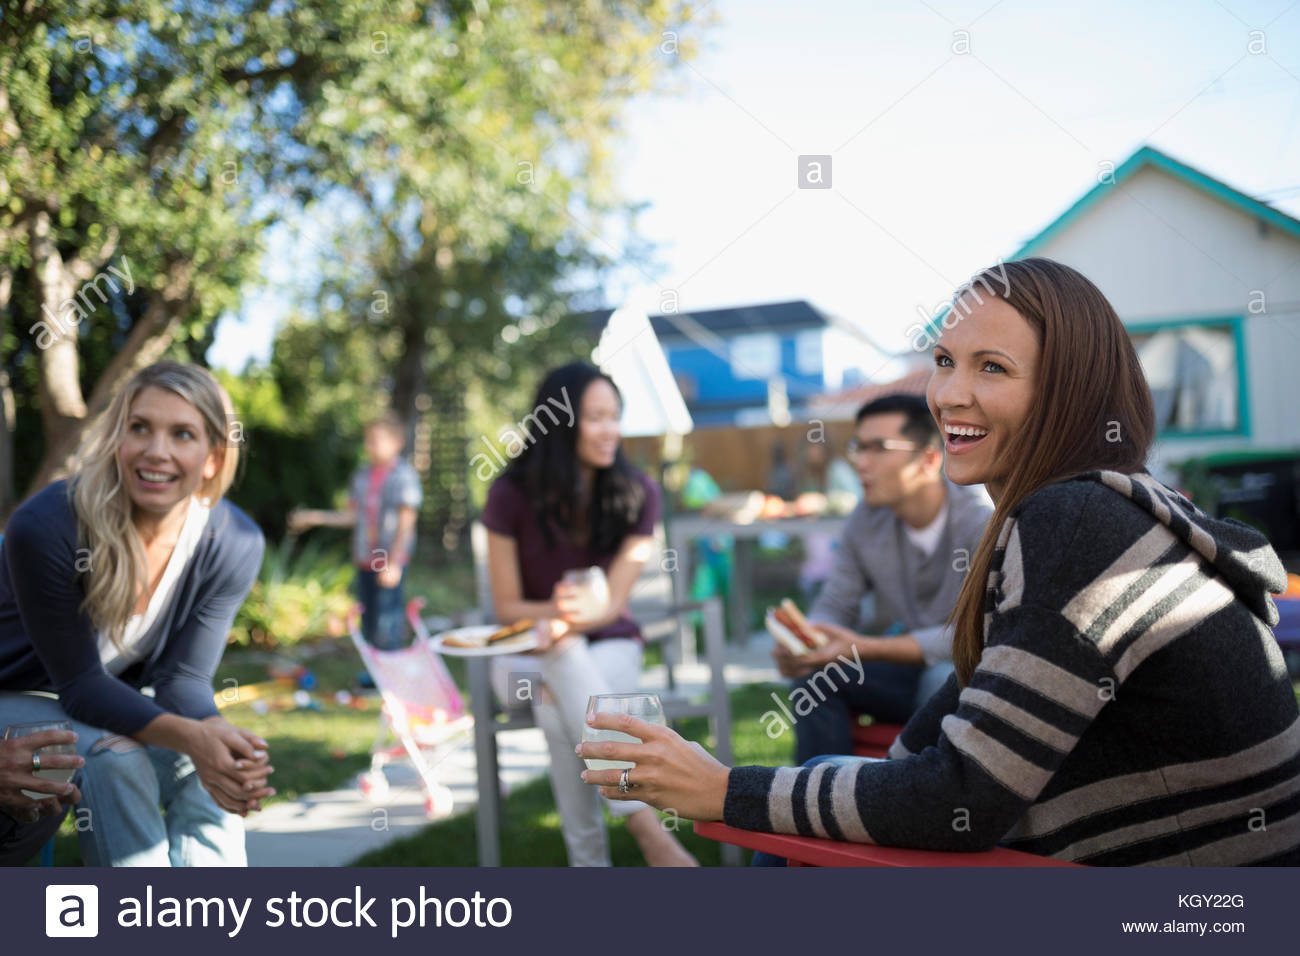 Smiling women enjoying backyard barbecue with neighbor friends Stock Photo